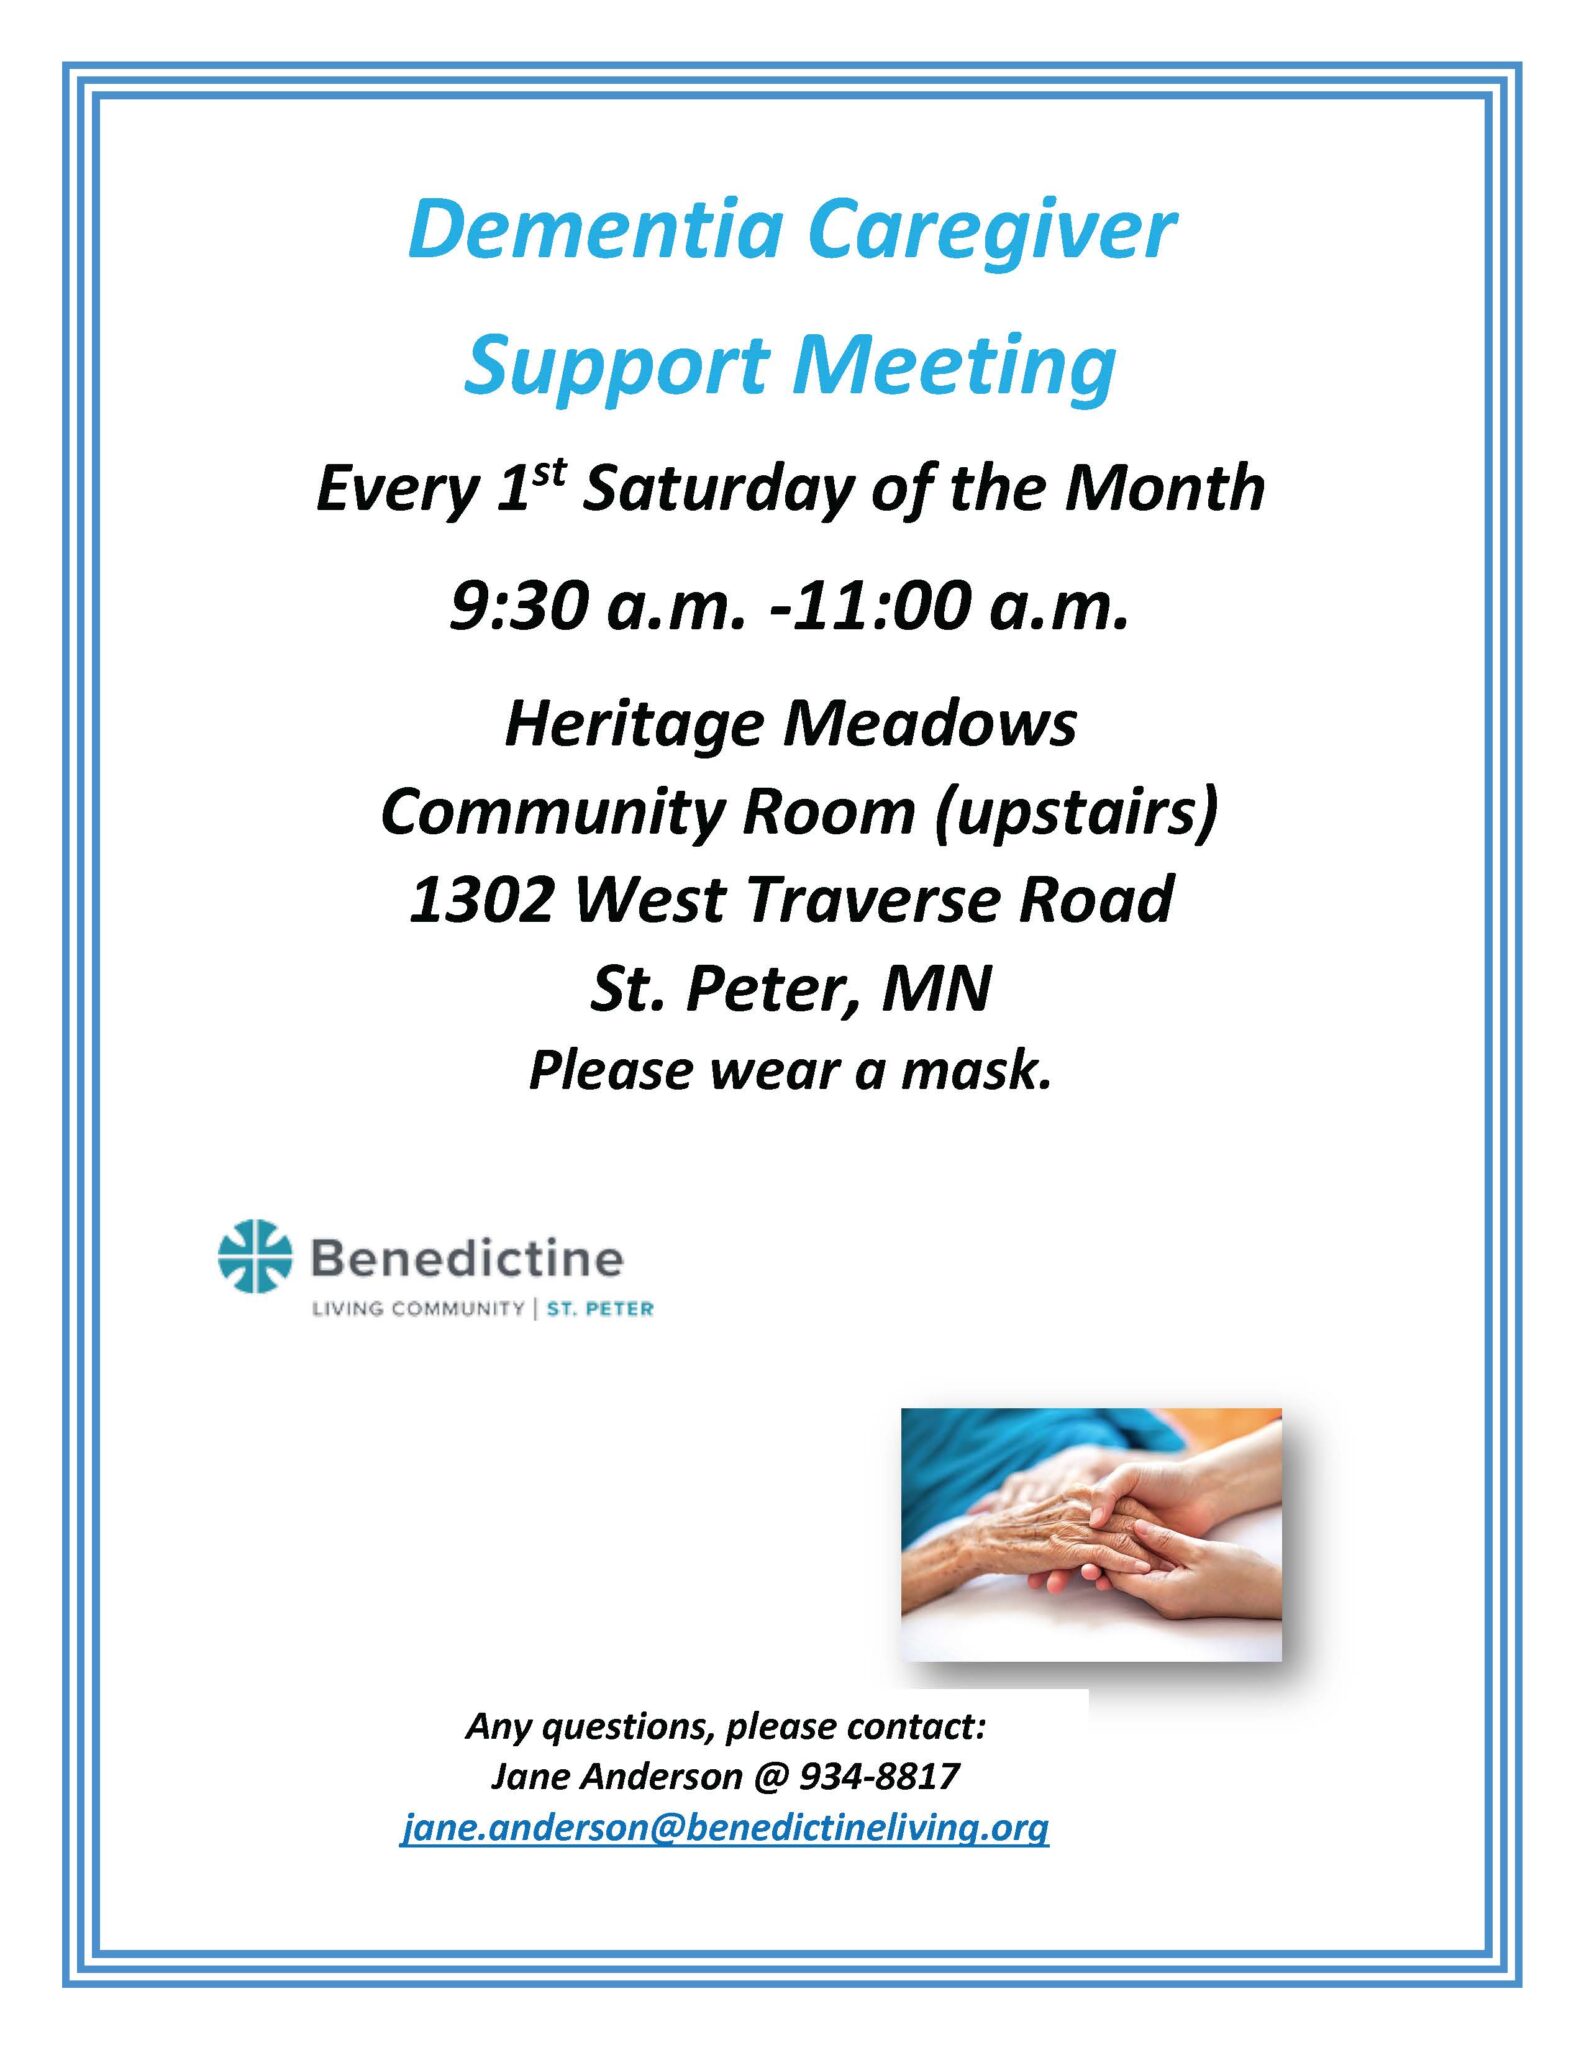 Dementia Caregiver Support Meeting flyer - see details below